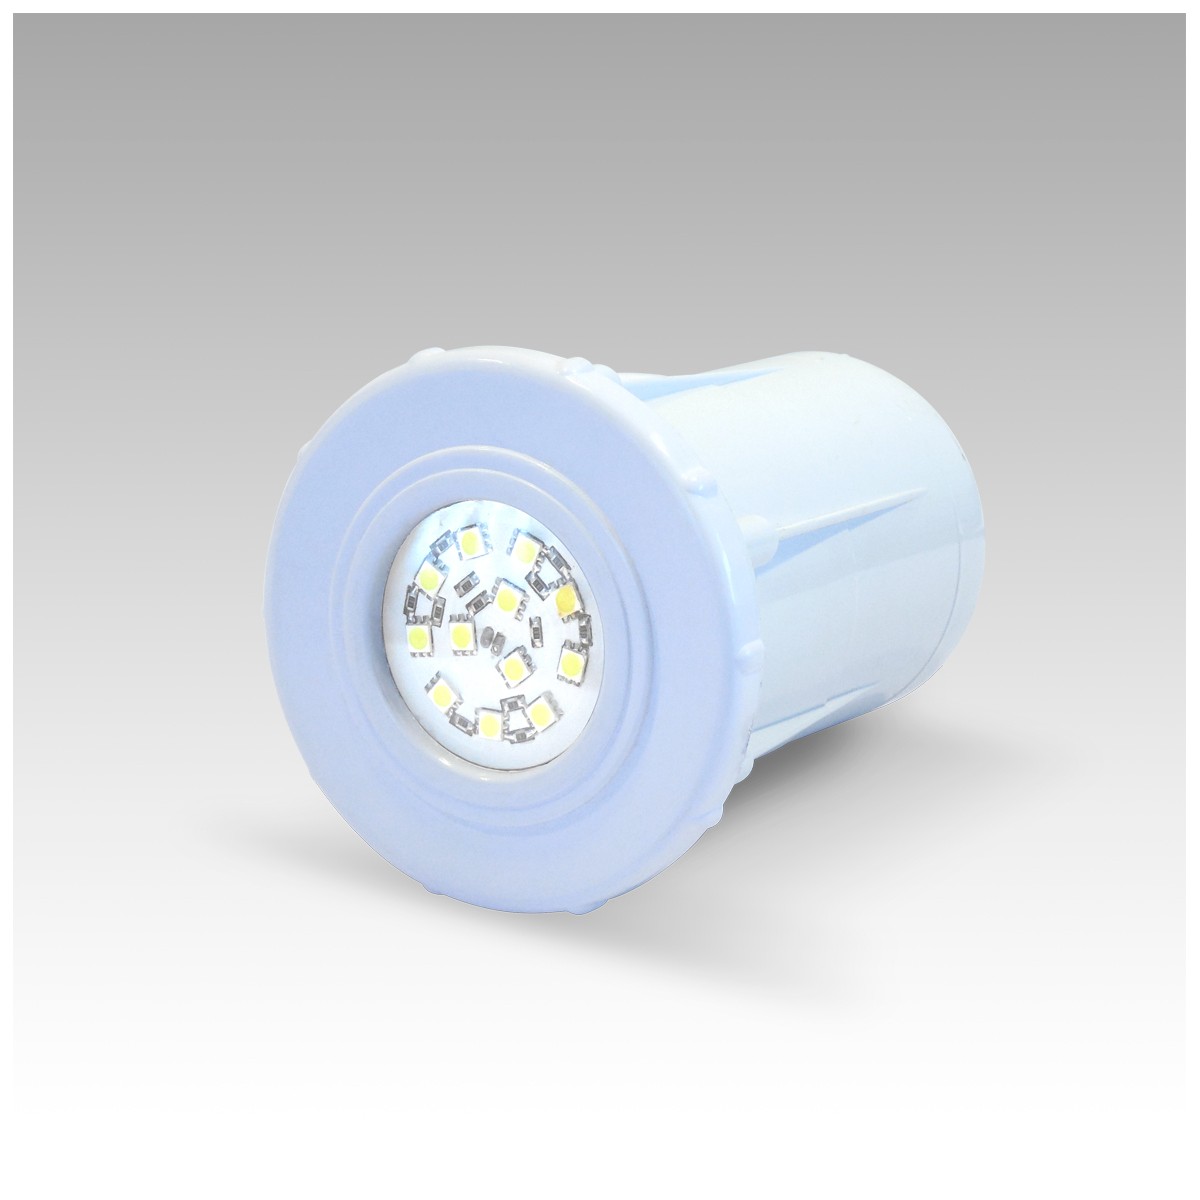 Luminaria spot blanco LED B-12 Hormigon